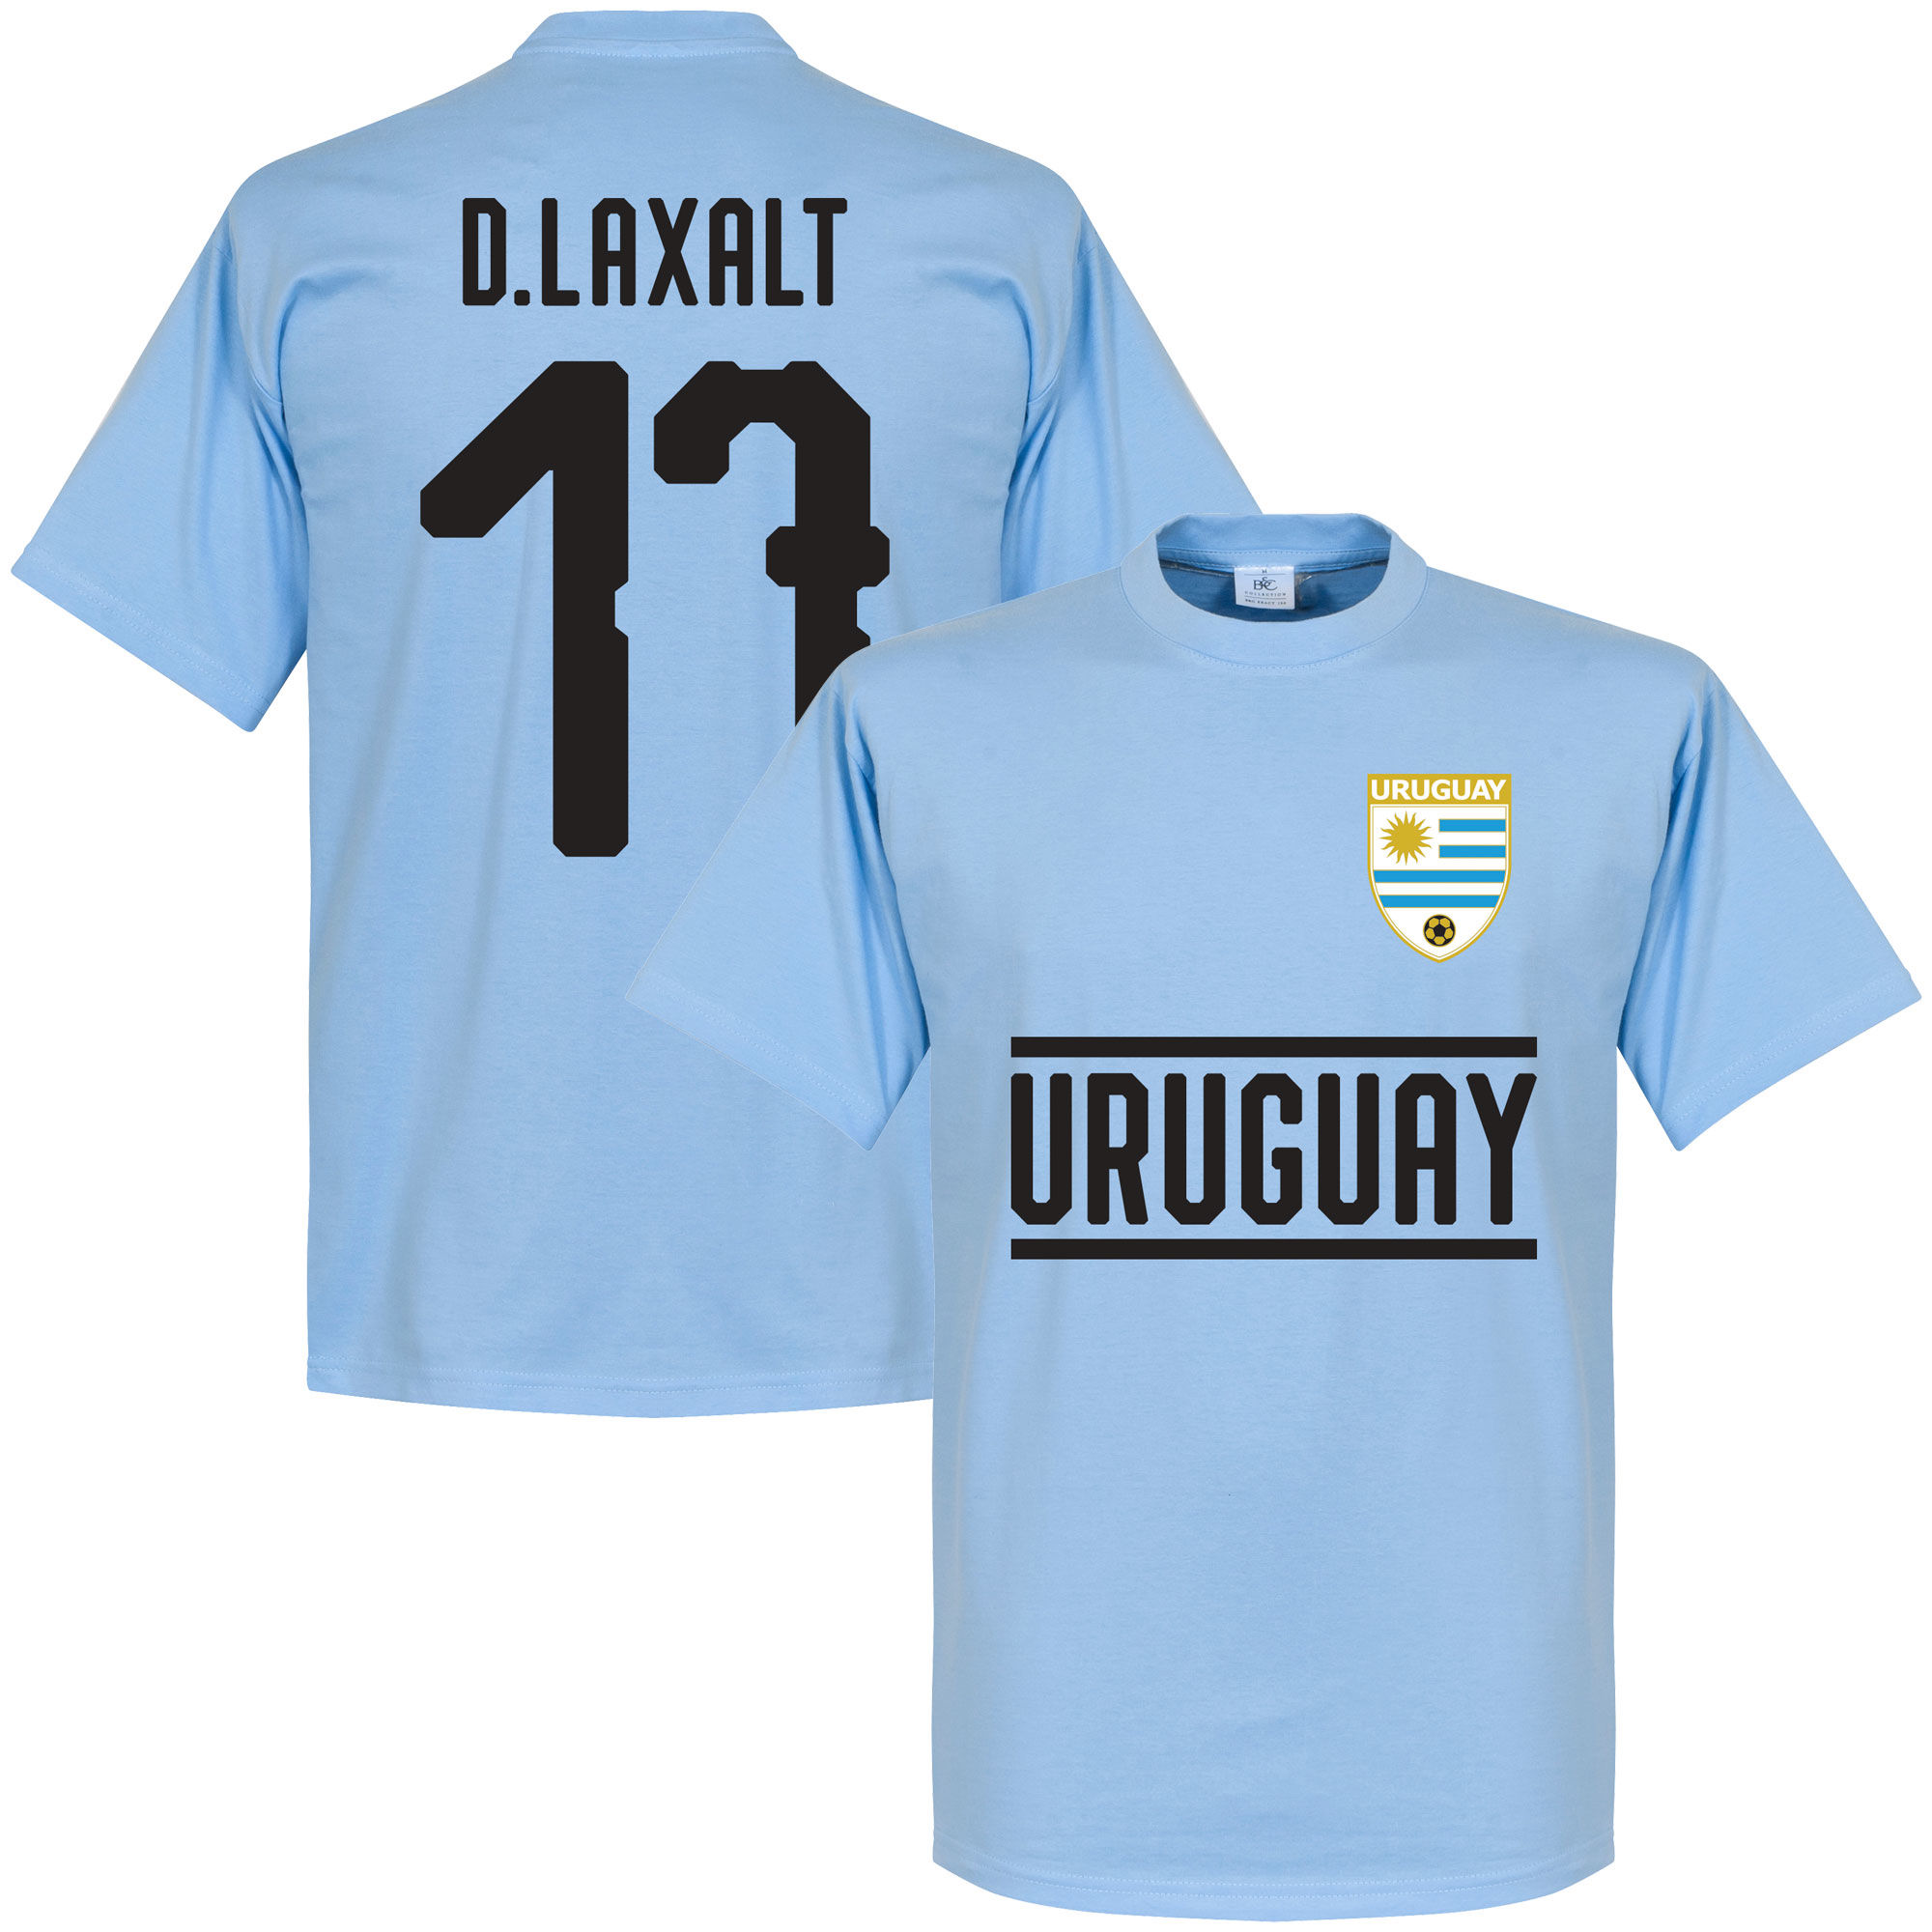 Uruguay - Tričko - číslo 17, Diego Laxalt, modré